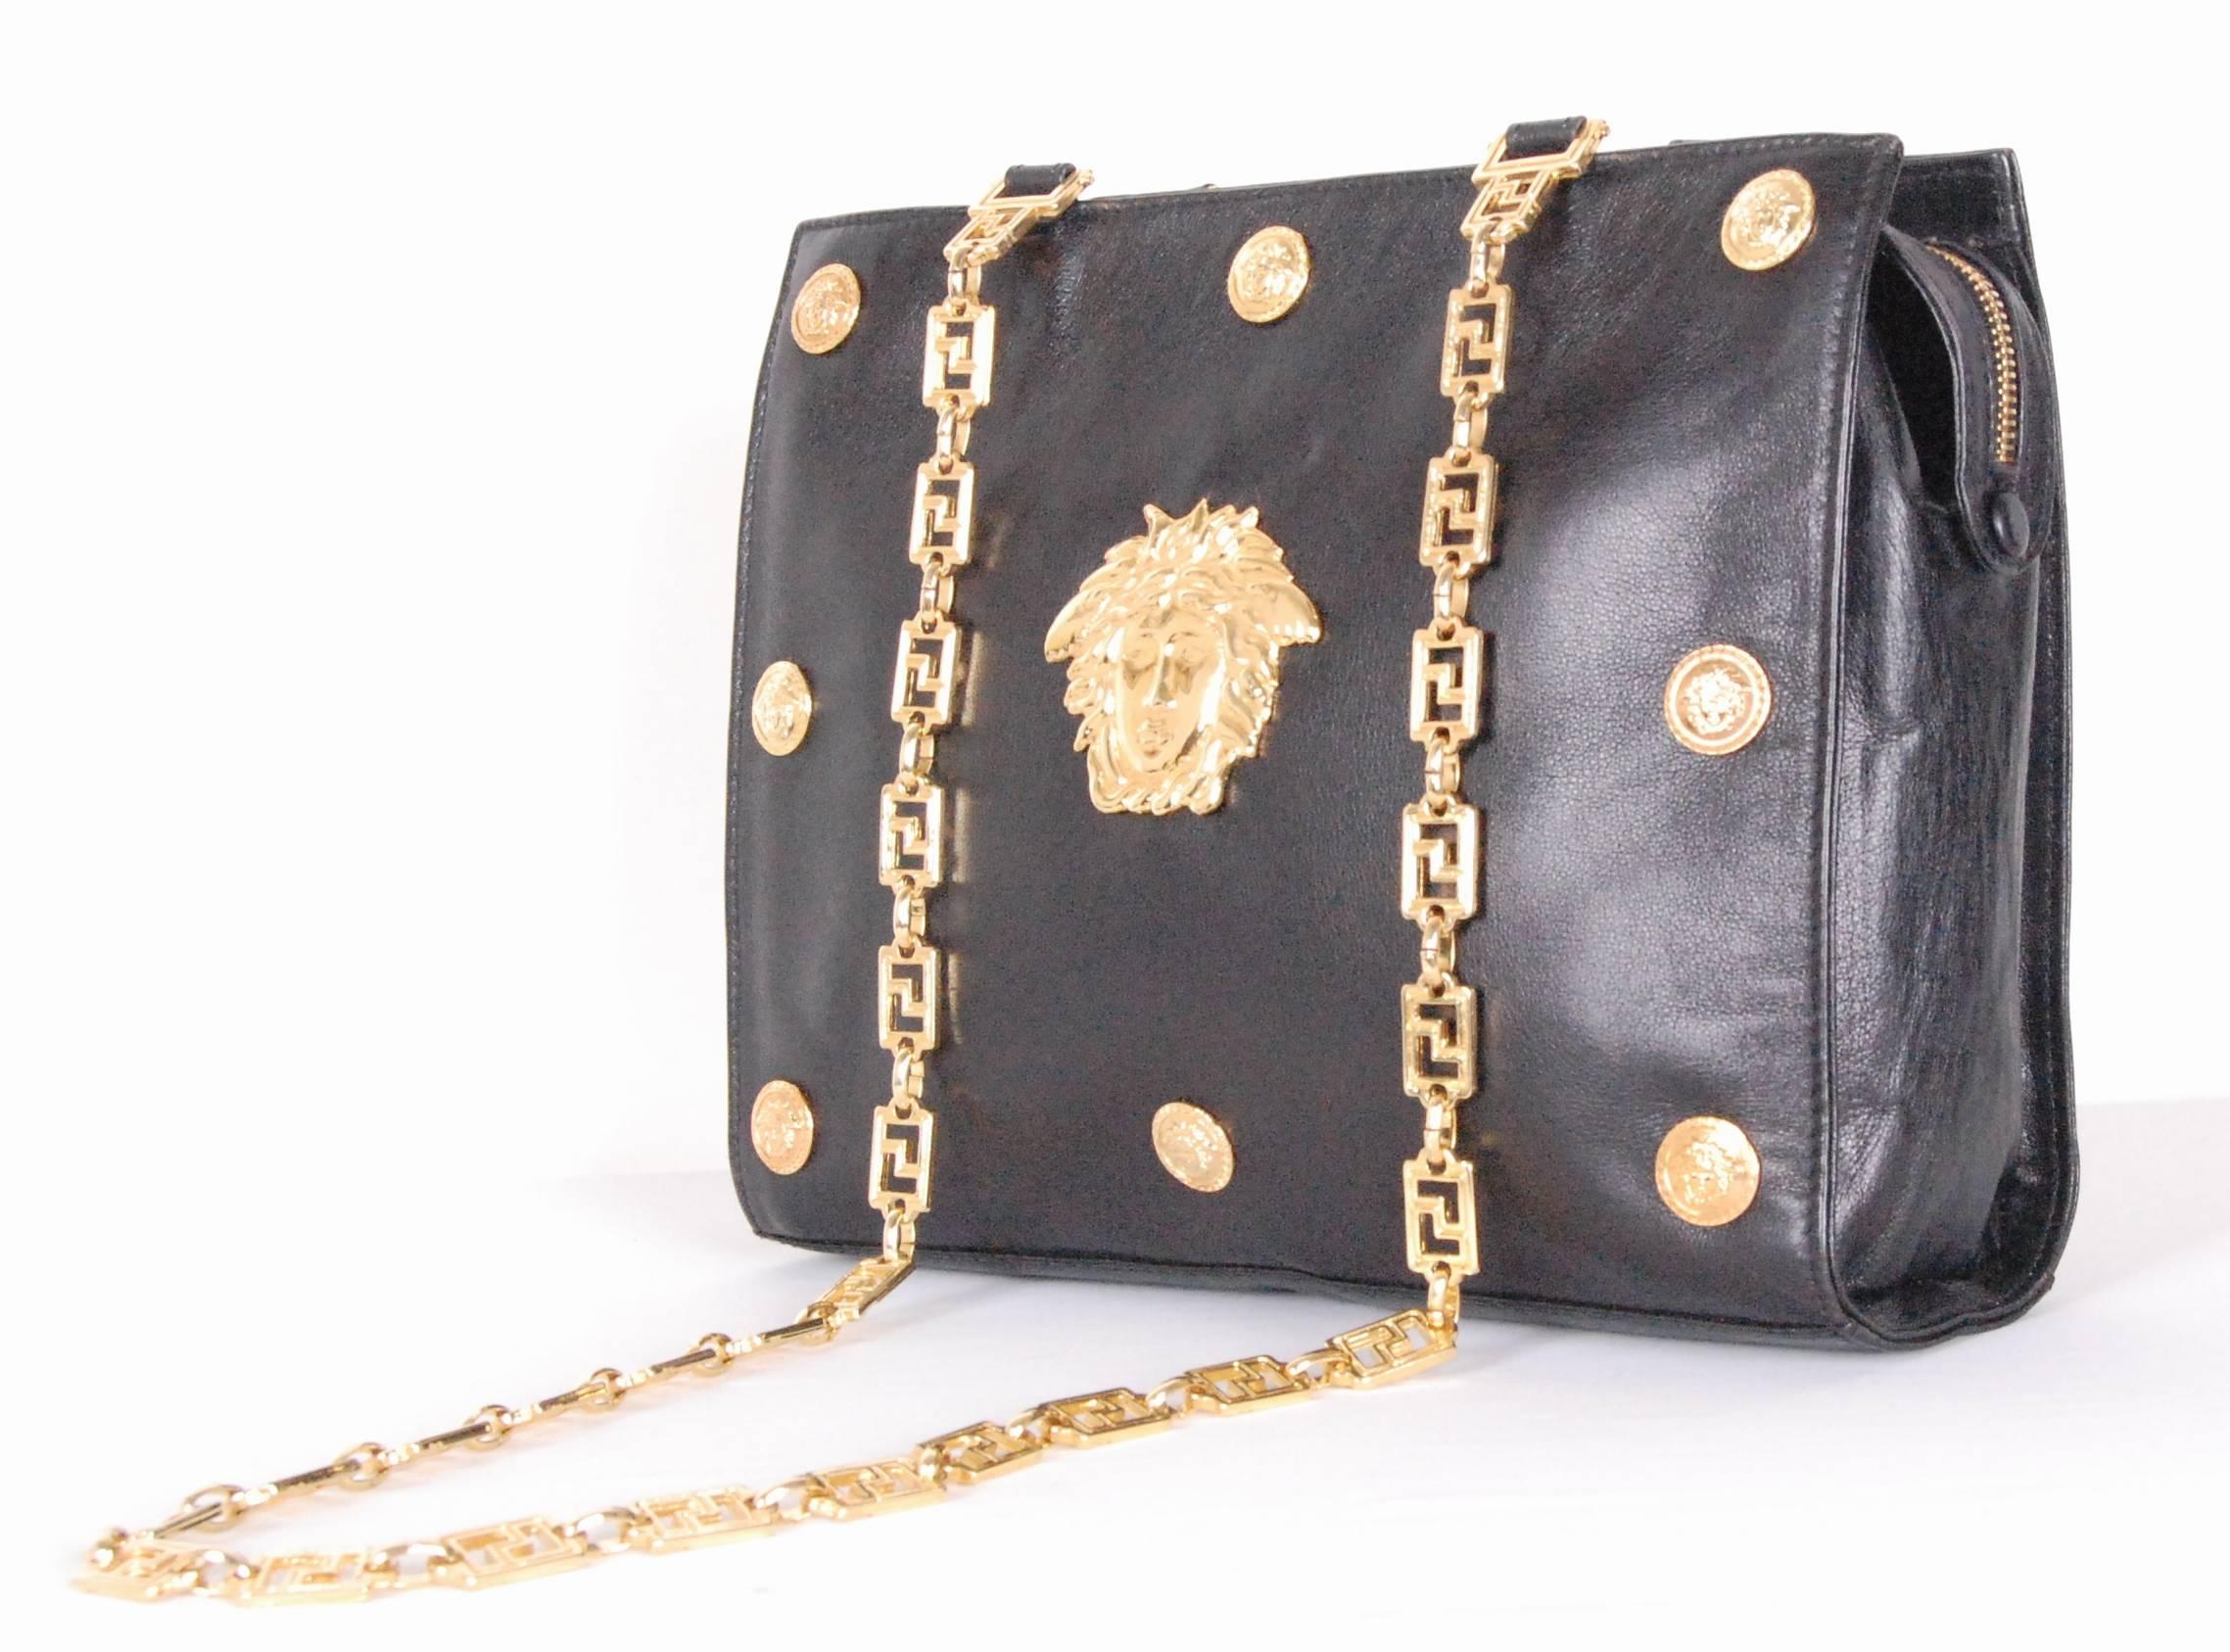 Gianni Versace Couture Medusa Leather Shoulder Bag 2